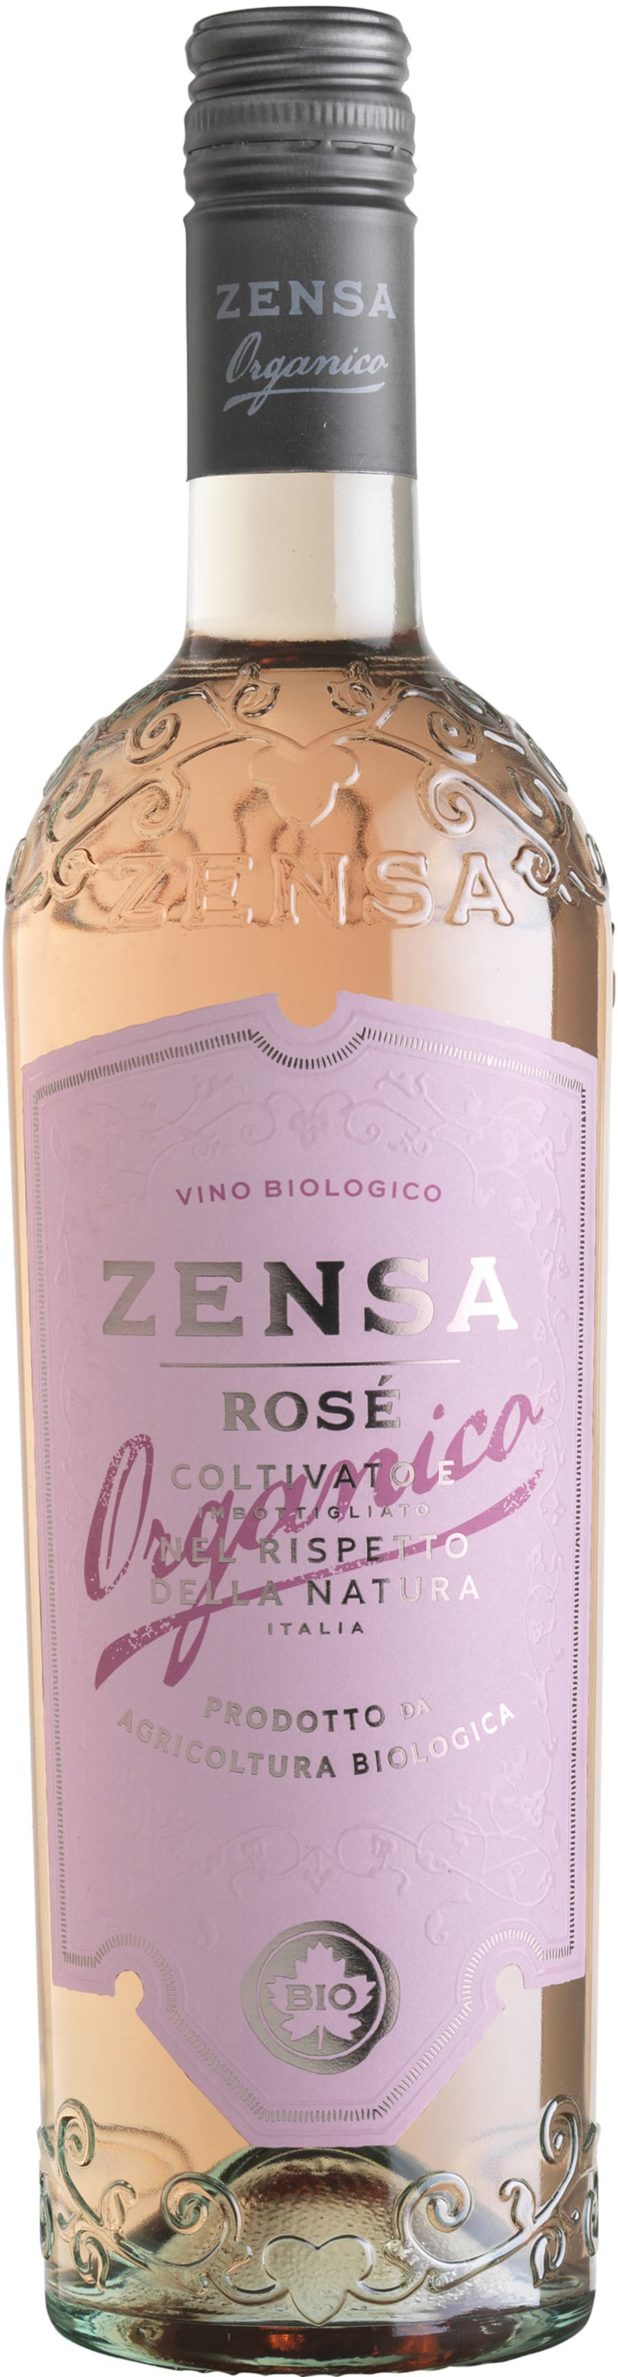 Zensa Rosé Organico 2018